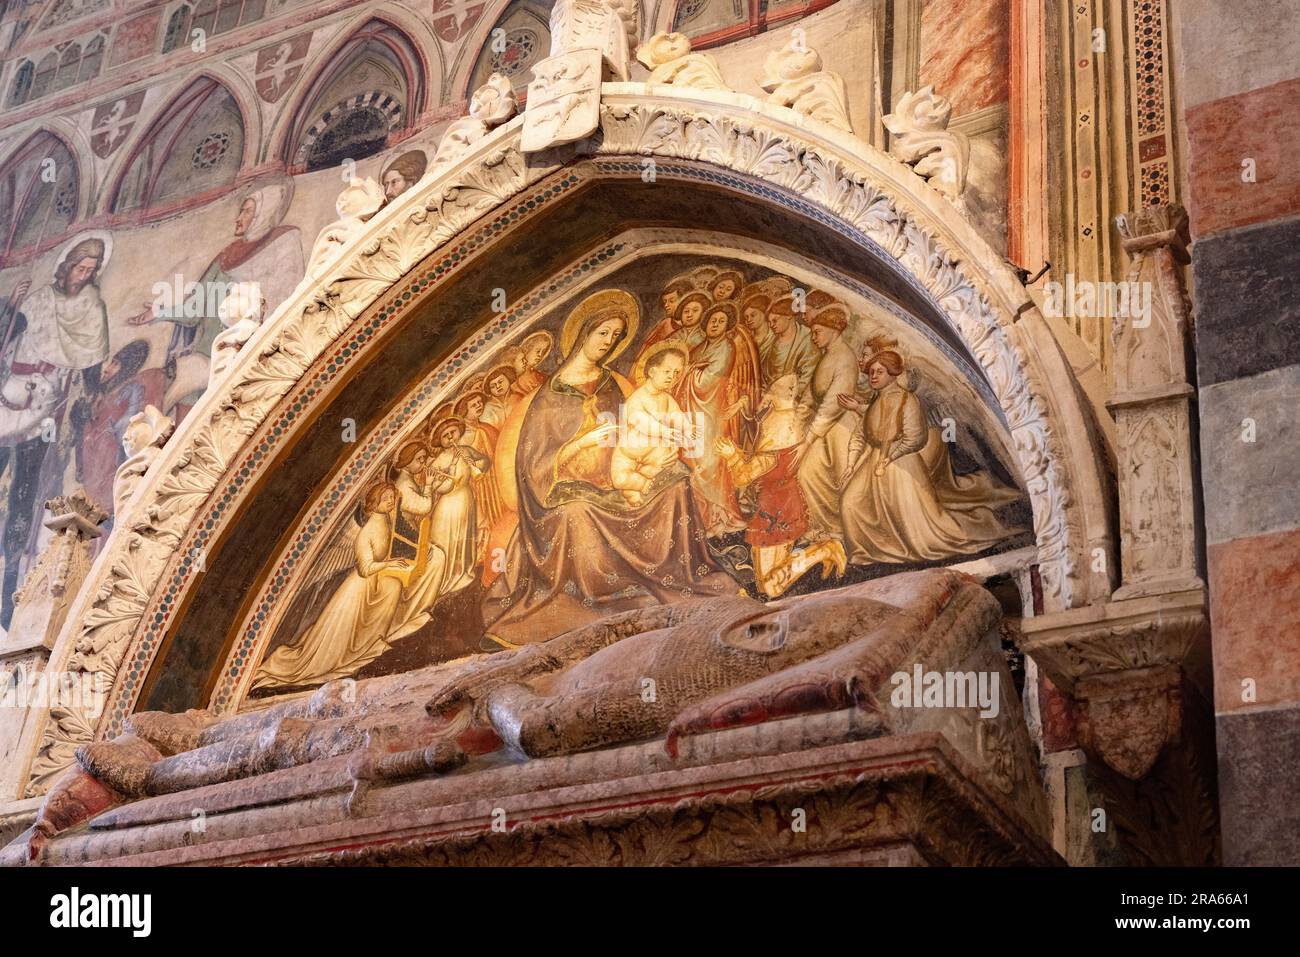 The Cavalli Chapel, Basilica St Anastasia, interior, Verona Italy. Painting in the lunette by Martino da Verona, 14th century Italian art. Stock Photo